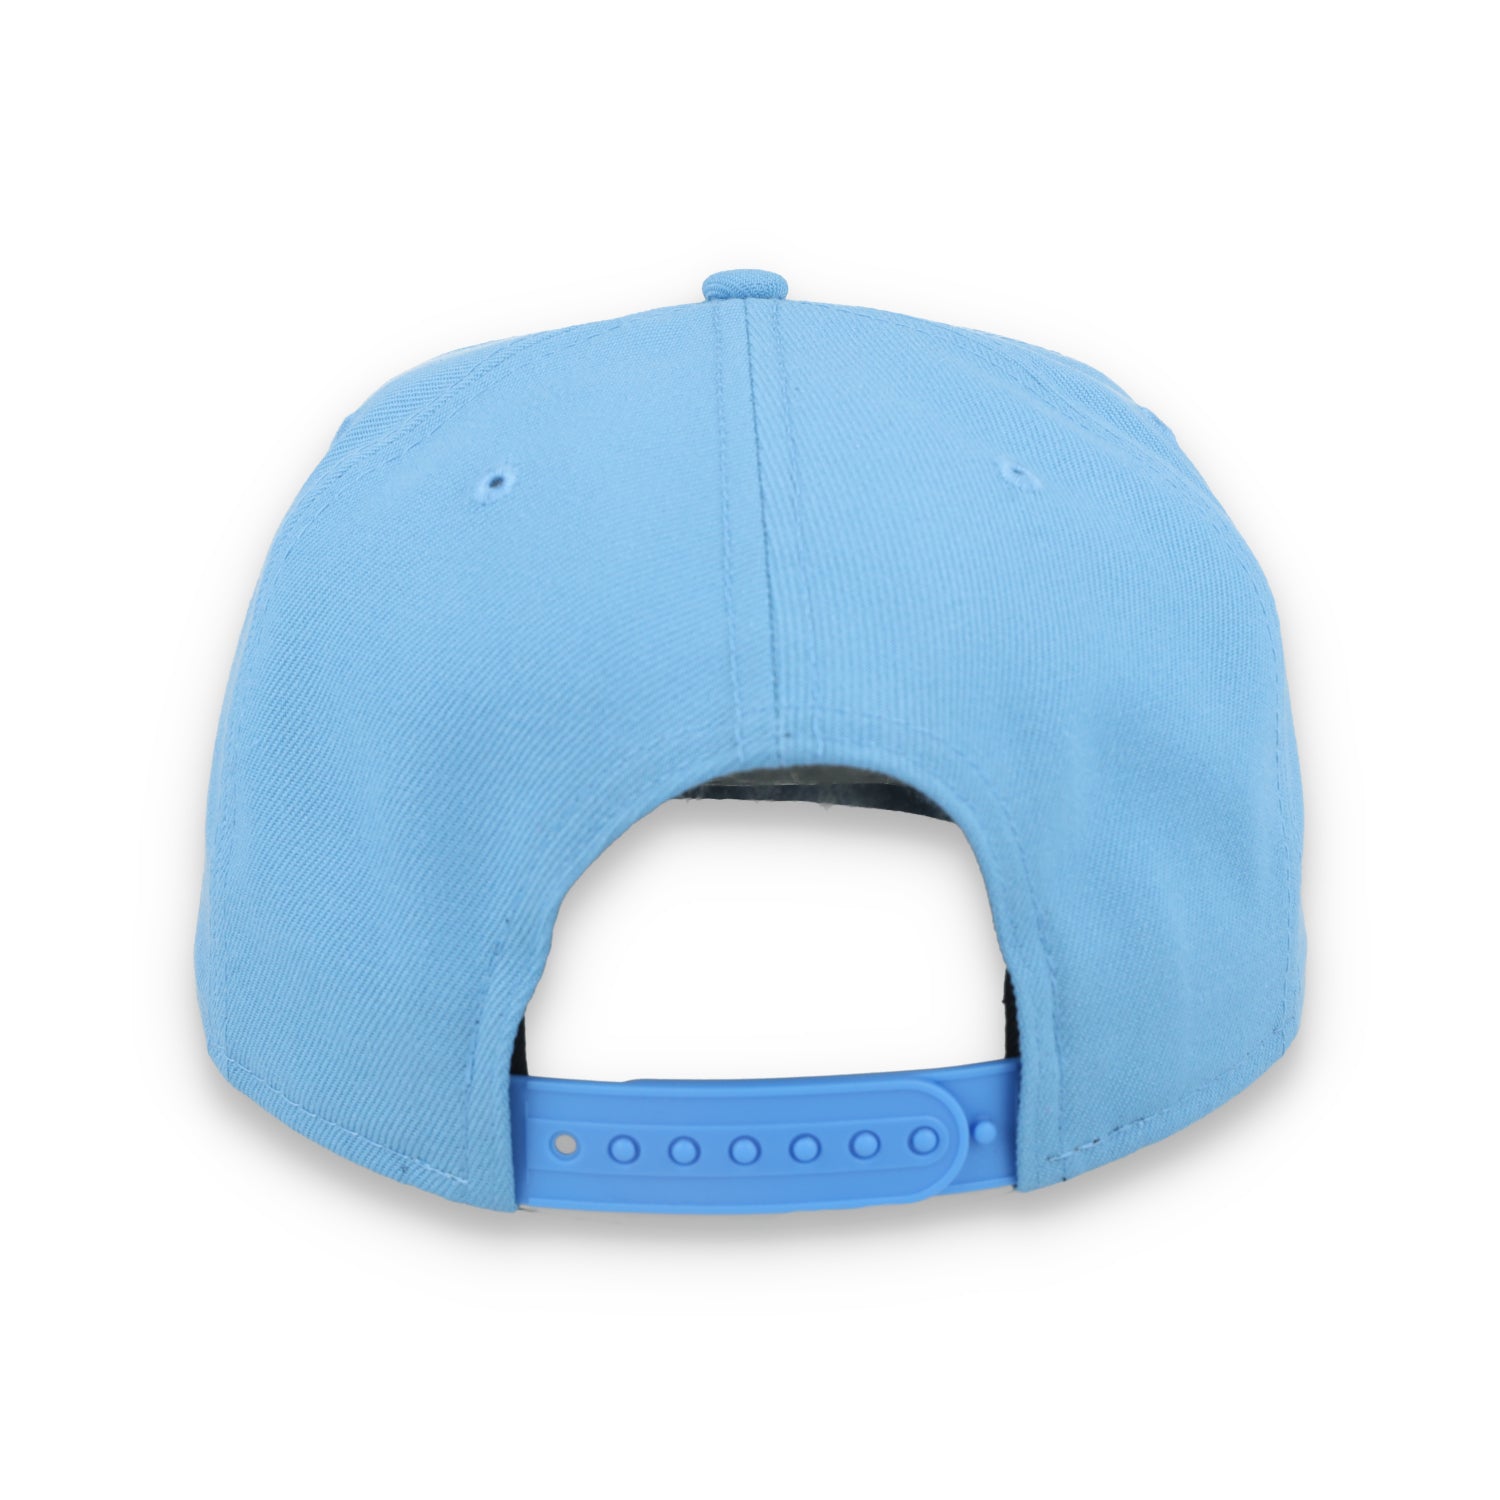 New Era Oakland Athletics MLB Basic 9FIFTY Snapback Hat-Sky Blue